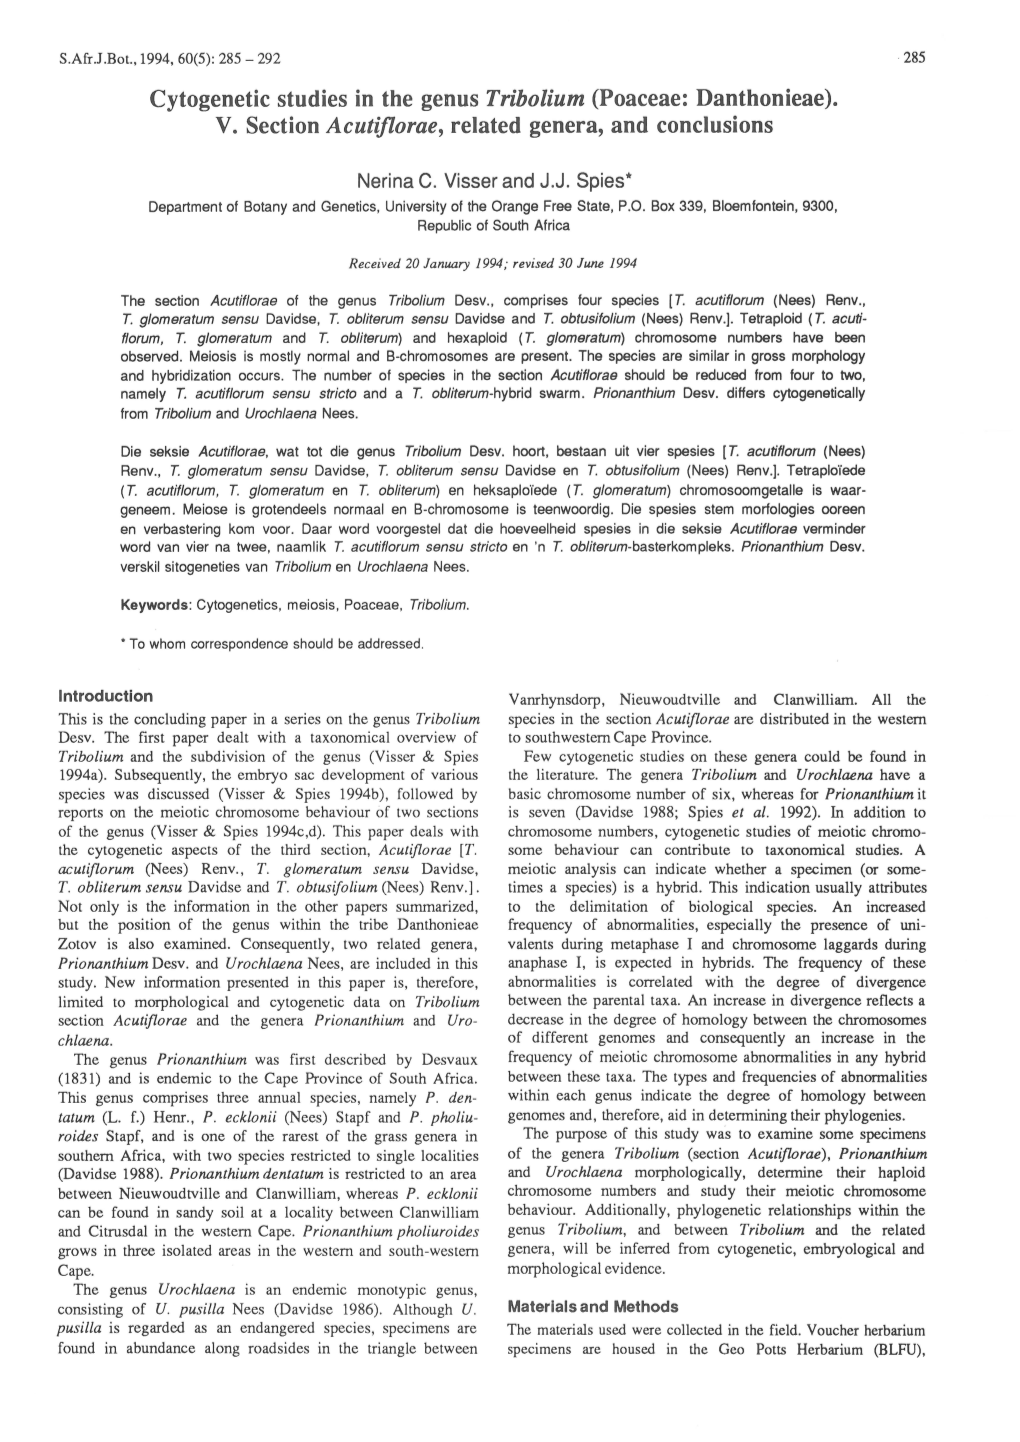 Cytogenetic Studies in the Genus Tribolium (Poaceae: Danthonieae)